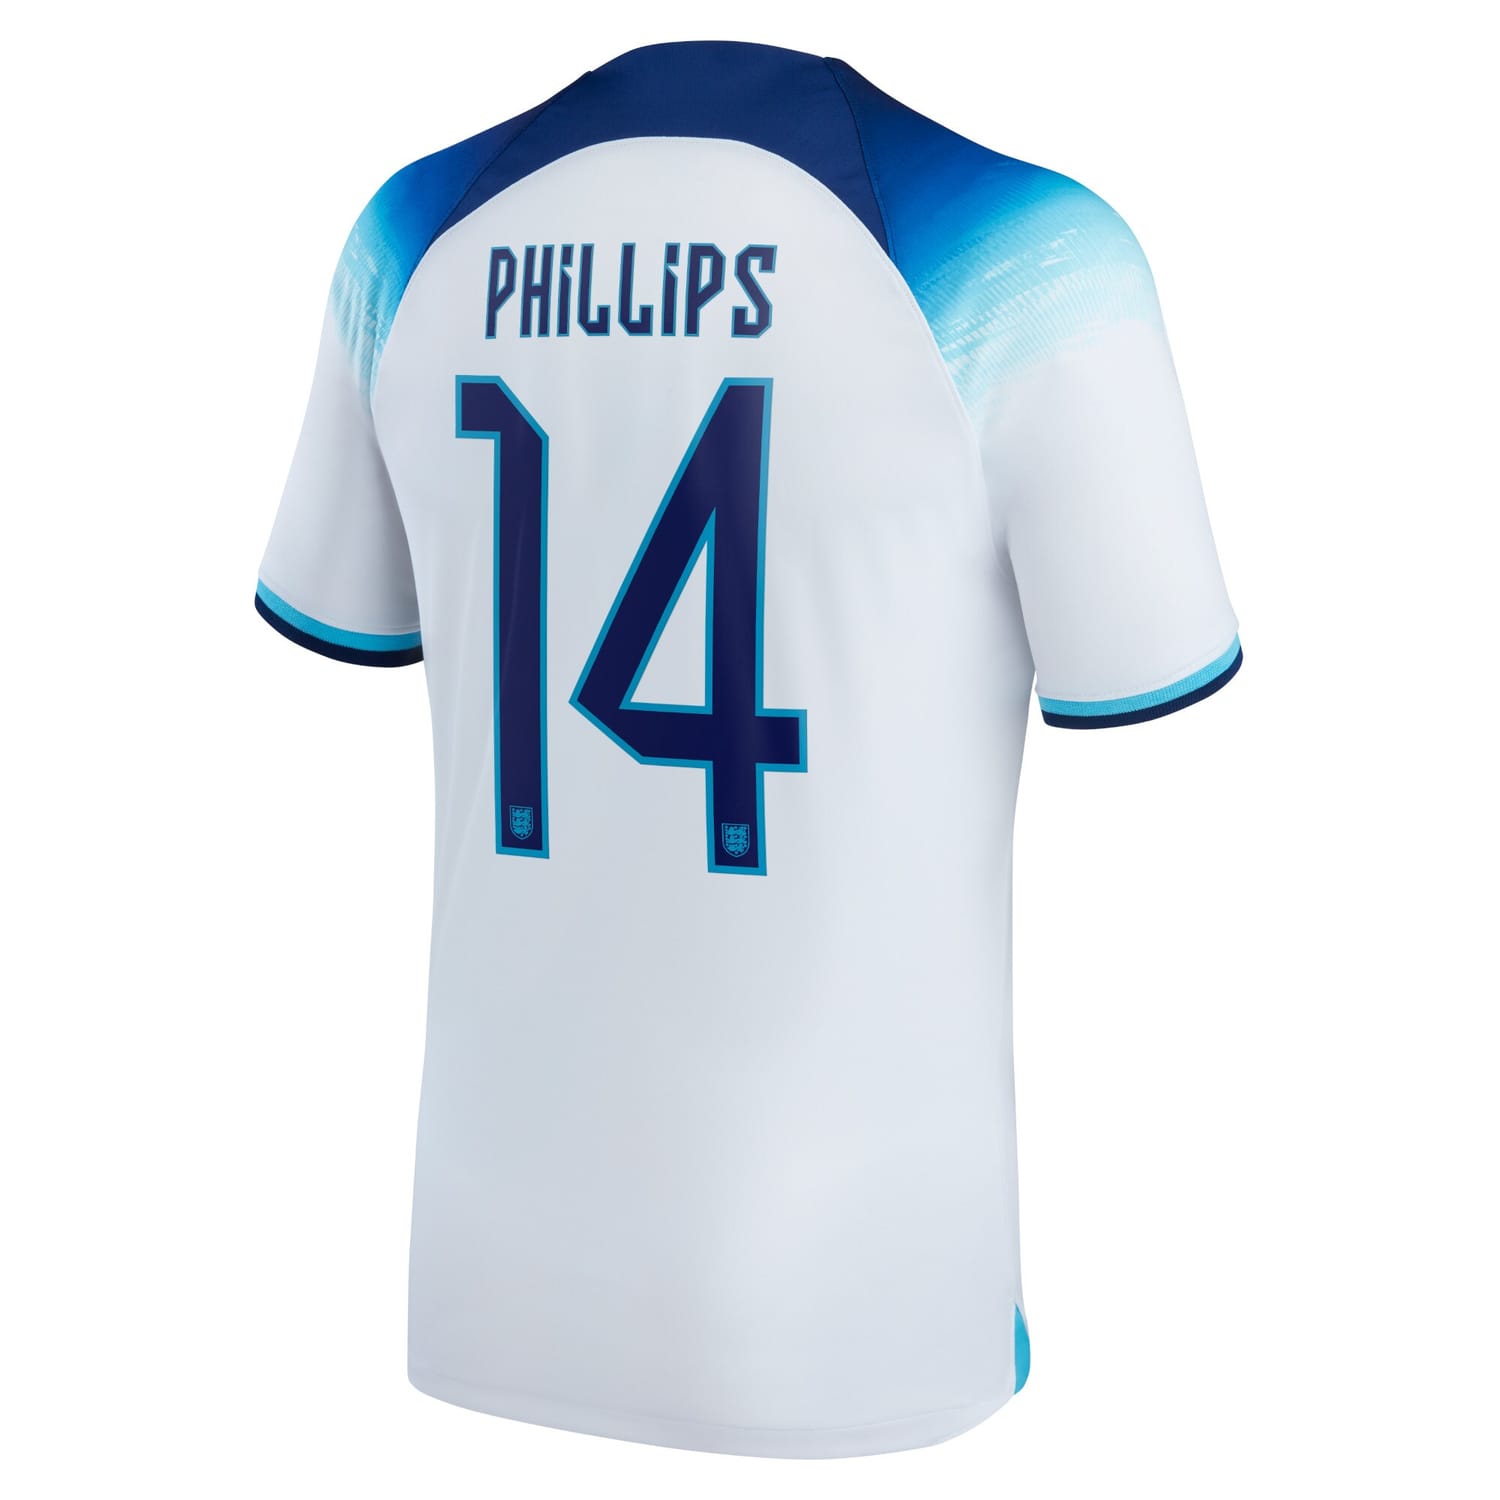 England National Team Home Jersey Shirt 2022 player Kalvin Phillips 14 printing for Men